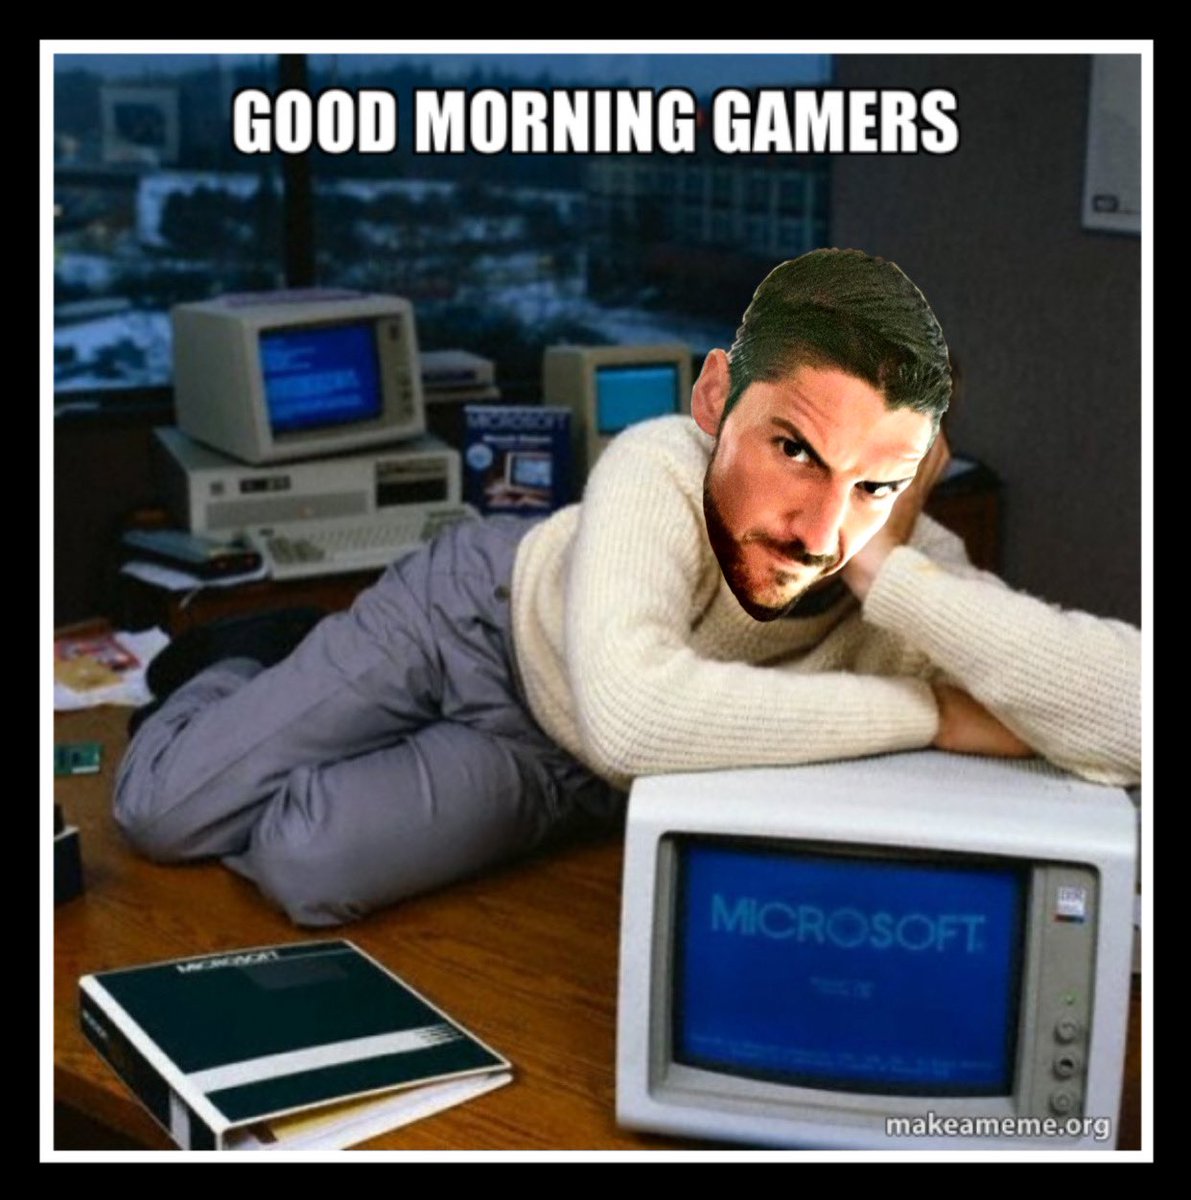 GooD MornInG Gamers! ☀️ 🎮 ☕️ 
☠︎🏝☠︎ᵗʰᵉƁ૦ʋղт︎y̶ᙖ૦ץչ☠︎🏝☠︎ wish you a Spectacular Sunday! 🎃 #fortnite #gaming #veterans #dailypic #funny #meme #dailymeme #fortnitememe #bountyboyz #billgates #morninggaming #gmg #goodmorning